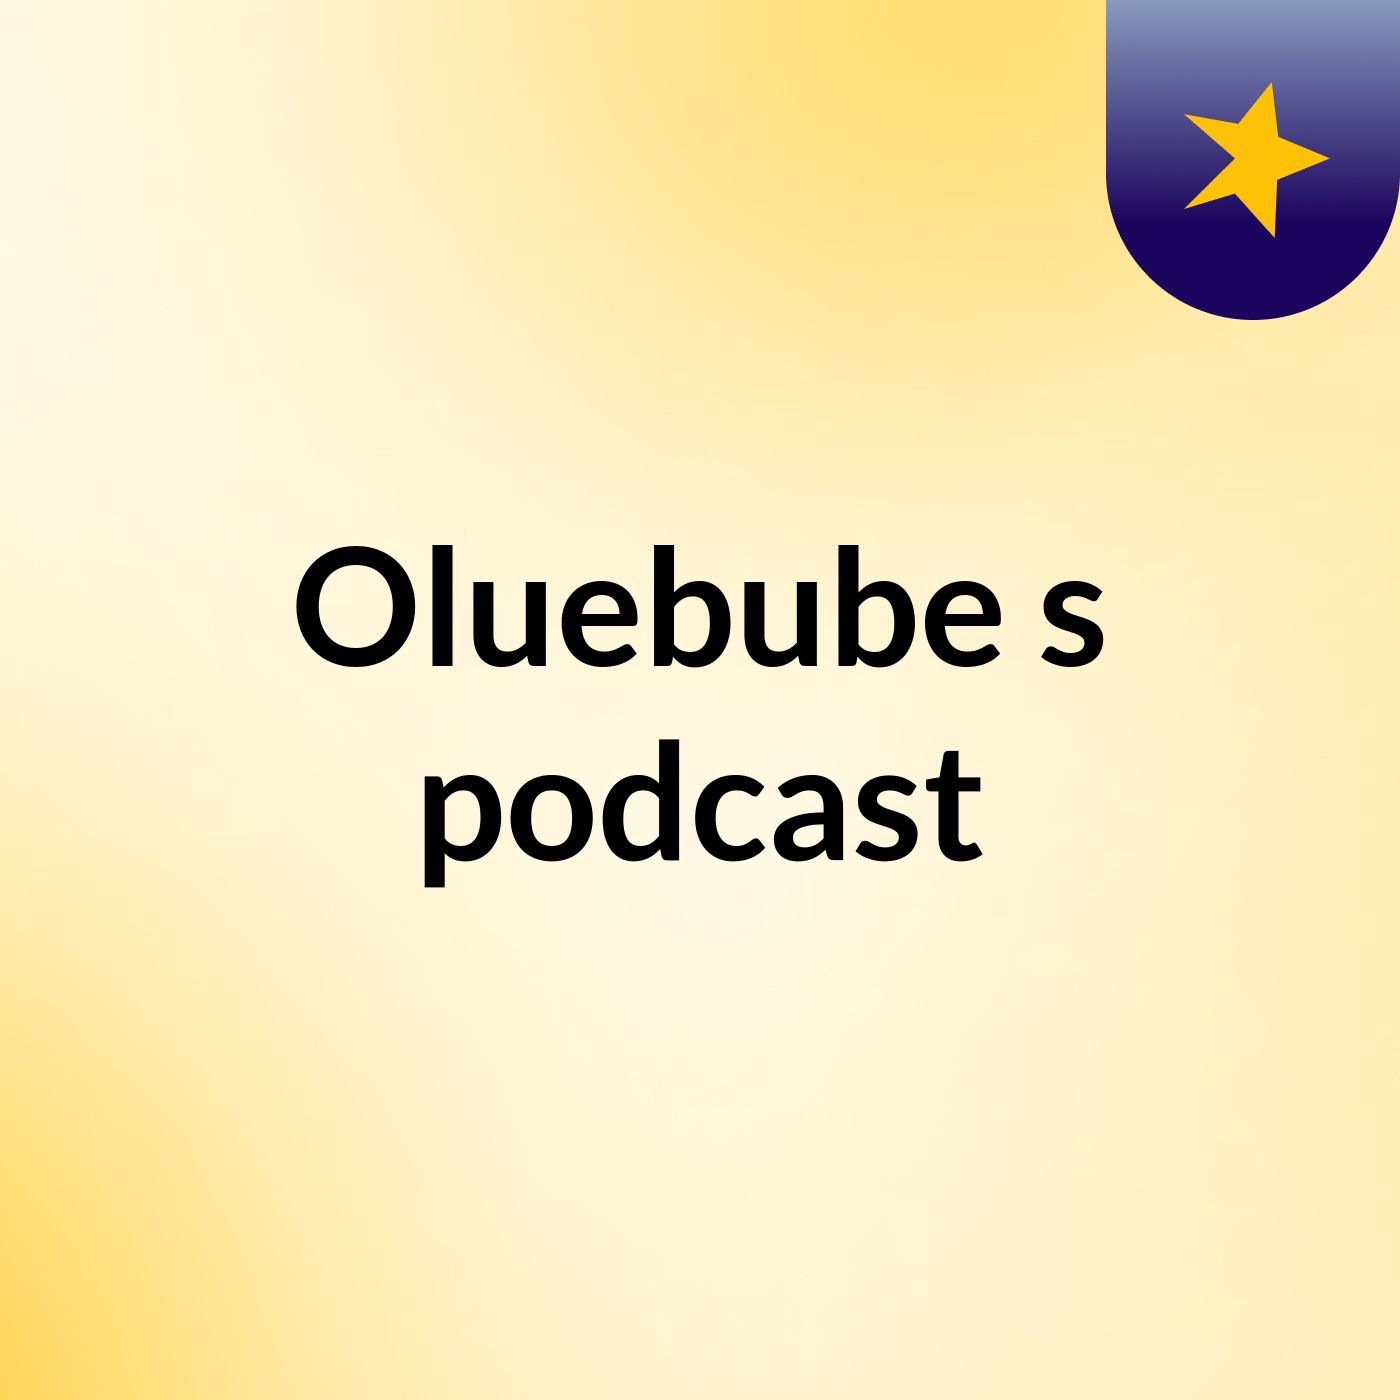 Episode 2 - Oluebube's podcast